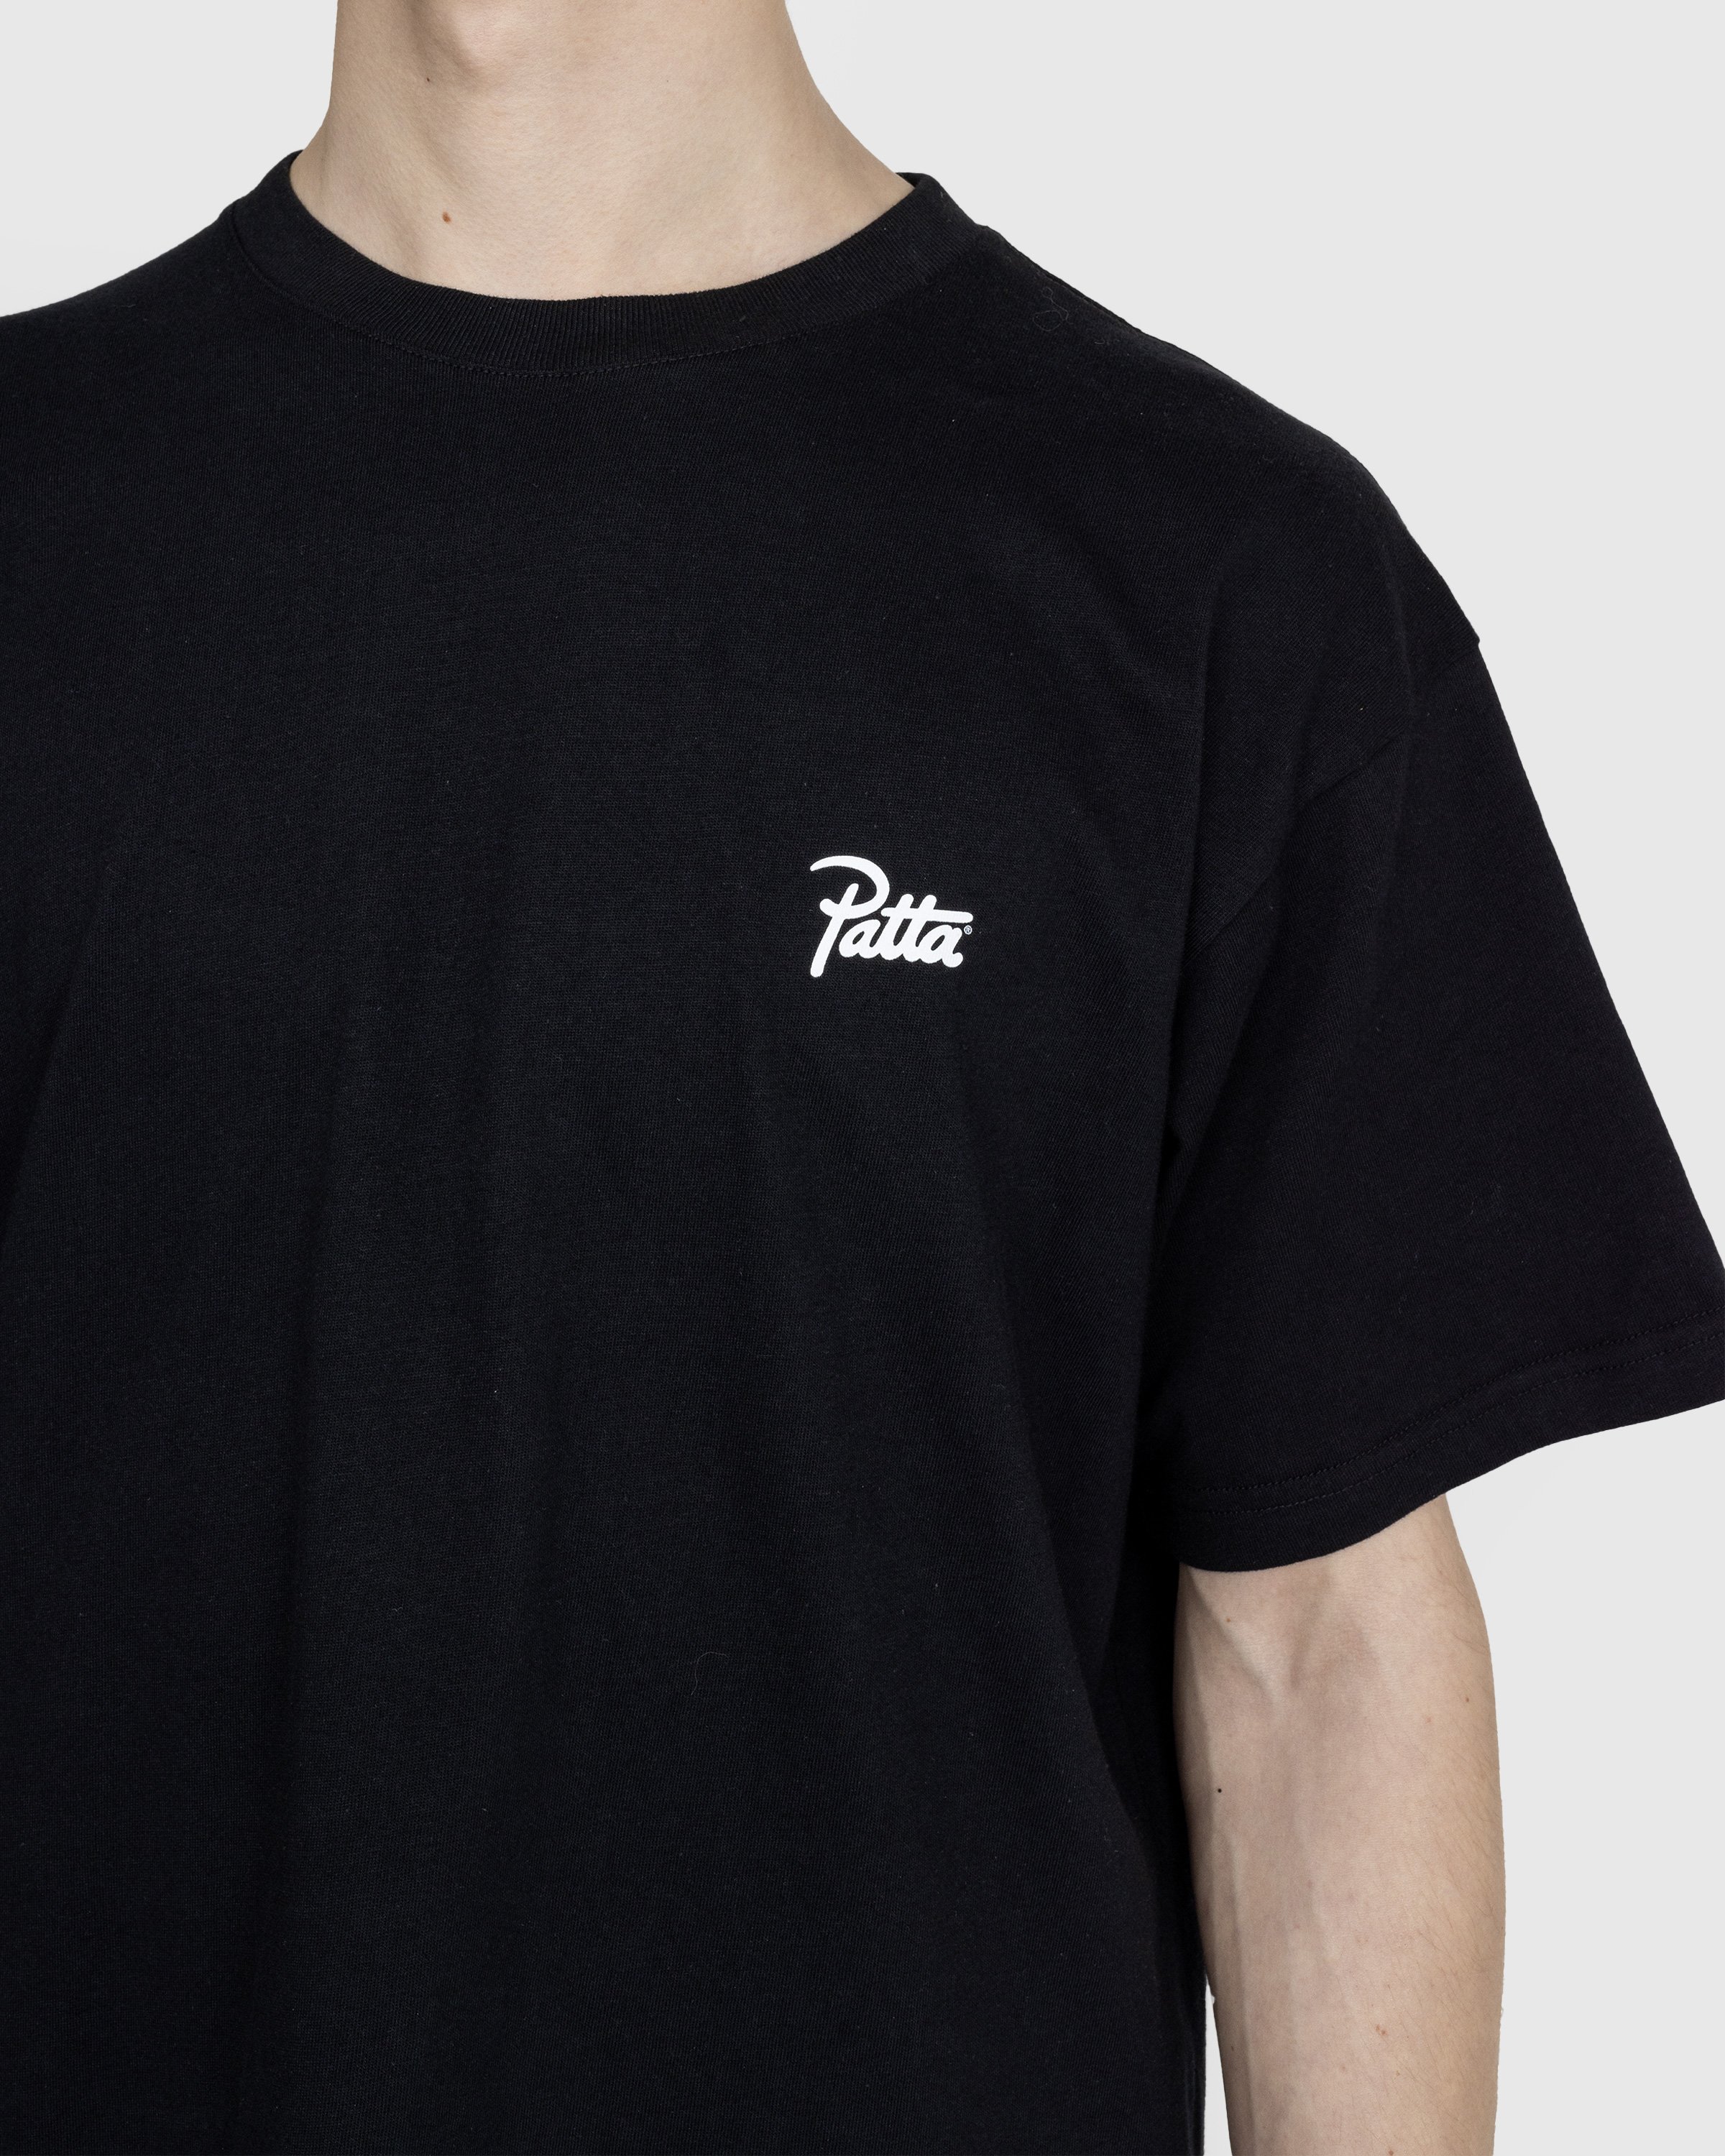 Patta - Pattassium T-Shirt Black - Clothing - Black - Image 6